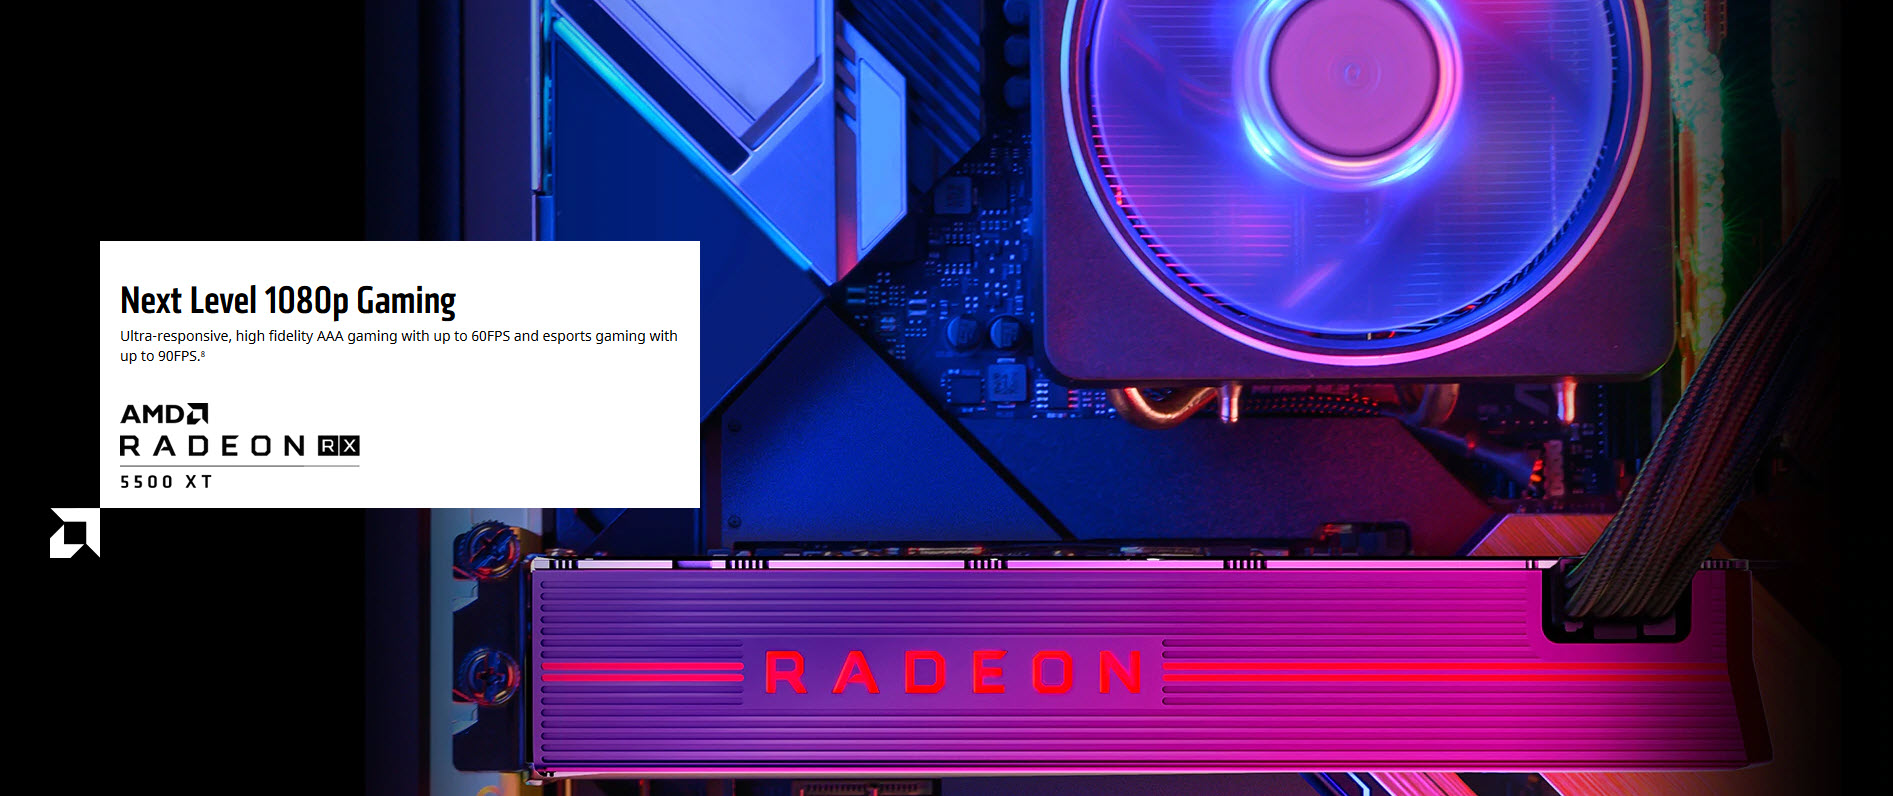 2019 12 16 10 47 101 AMD เปิดตัวกราฟิกการ์ด AMD Radeon™ RX 5500 XT: ประสิทธิภาพความคมชัดระดับ 1080p ที่น่าทึ่ง พร้อมด้วยซอฟต์แวร์ฟีเจอร์ที่ทรงพลัง 